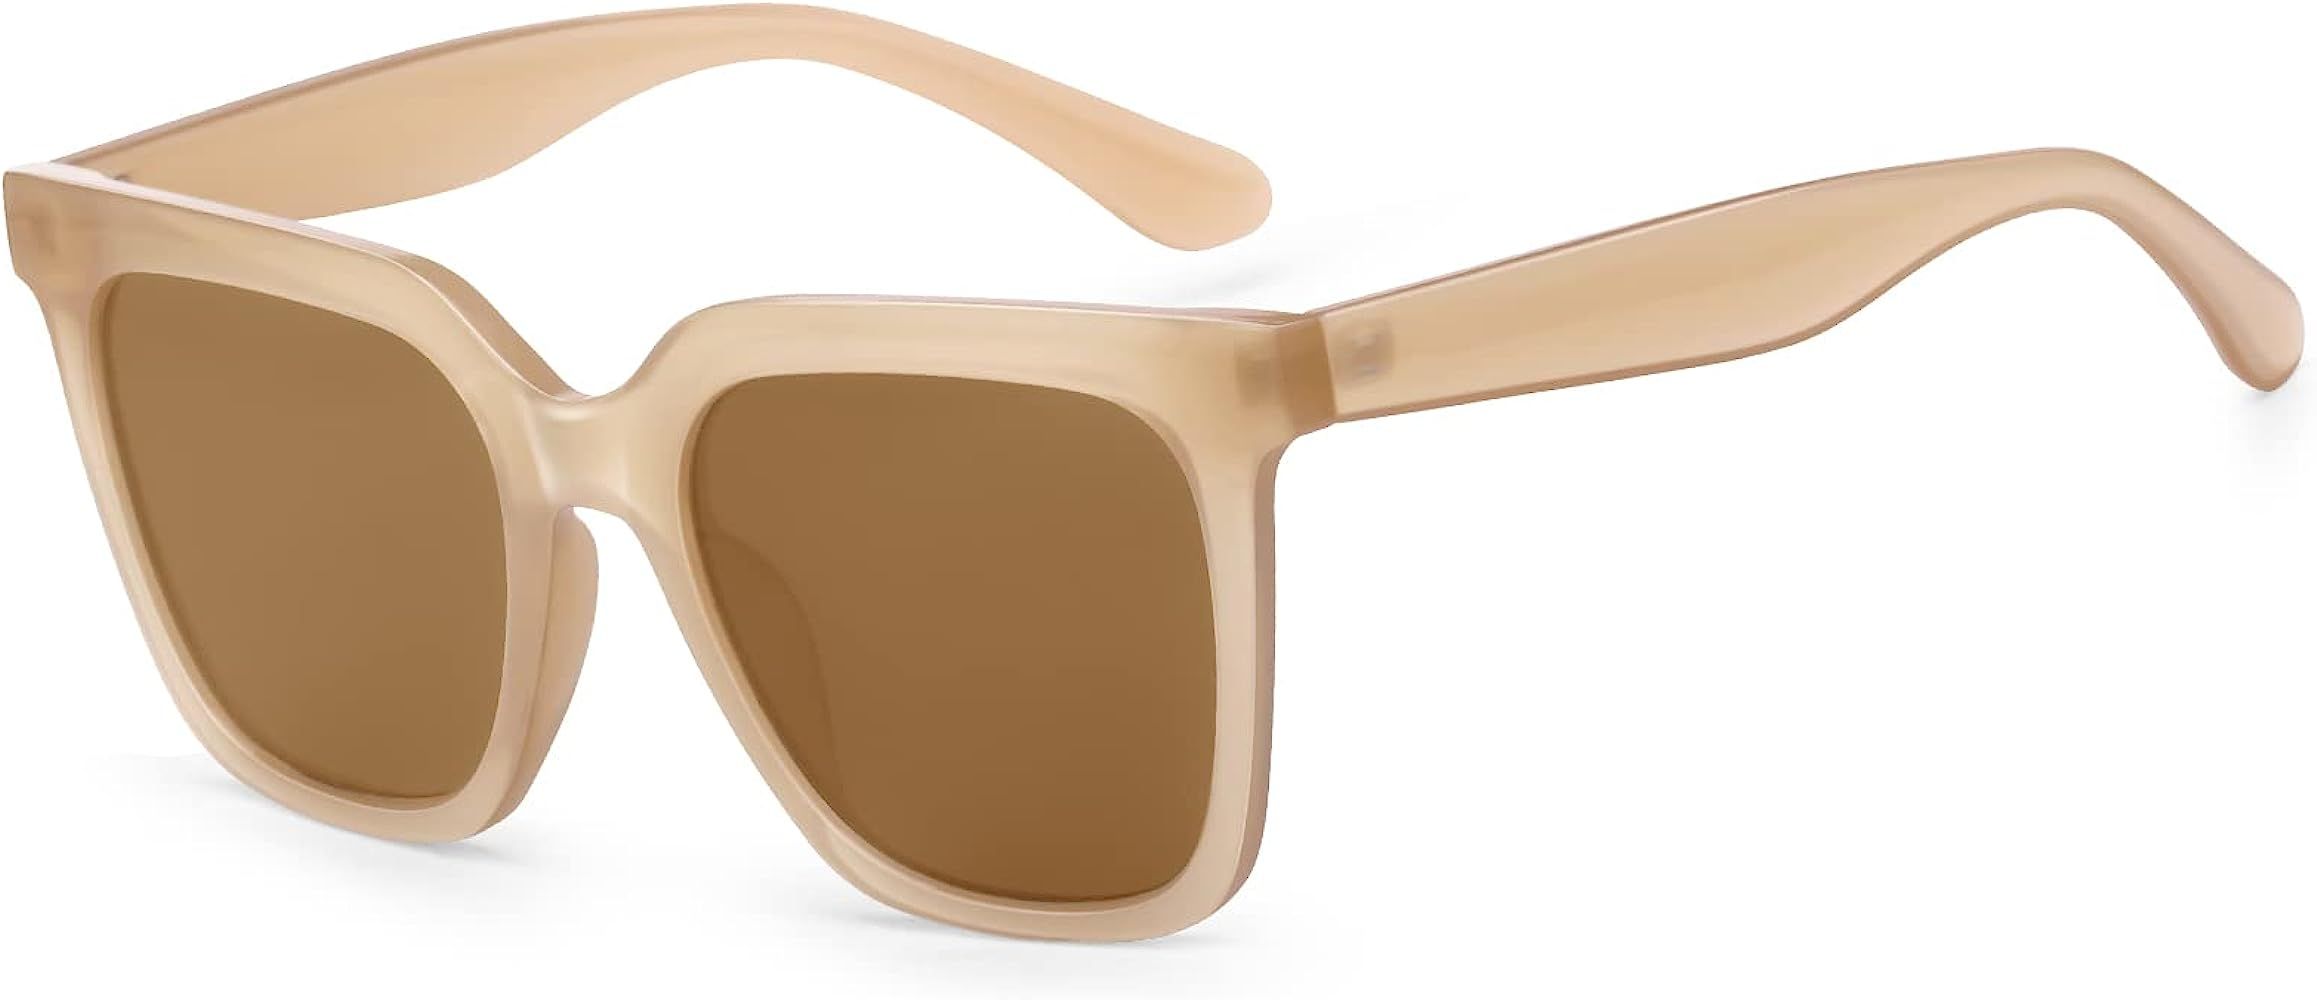 KUGUAOK Trendy Simple Sunglasses Women UV Protection Outdoor Travel Square Sun Glasses UV400 Lens | Amazon (US)